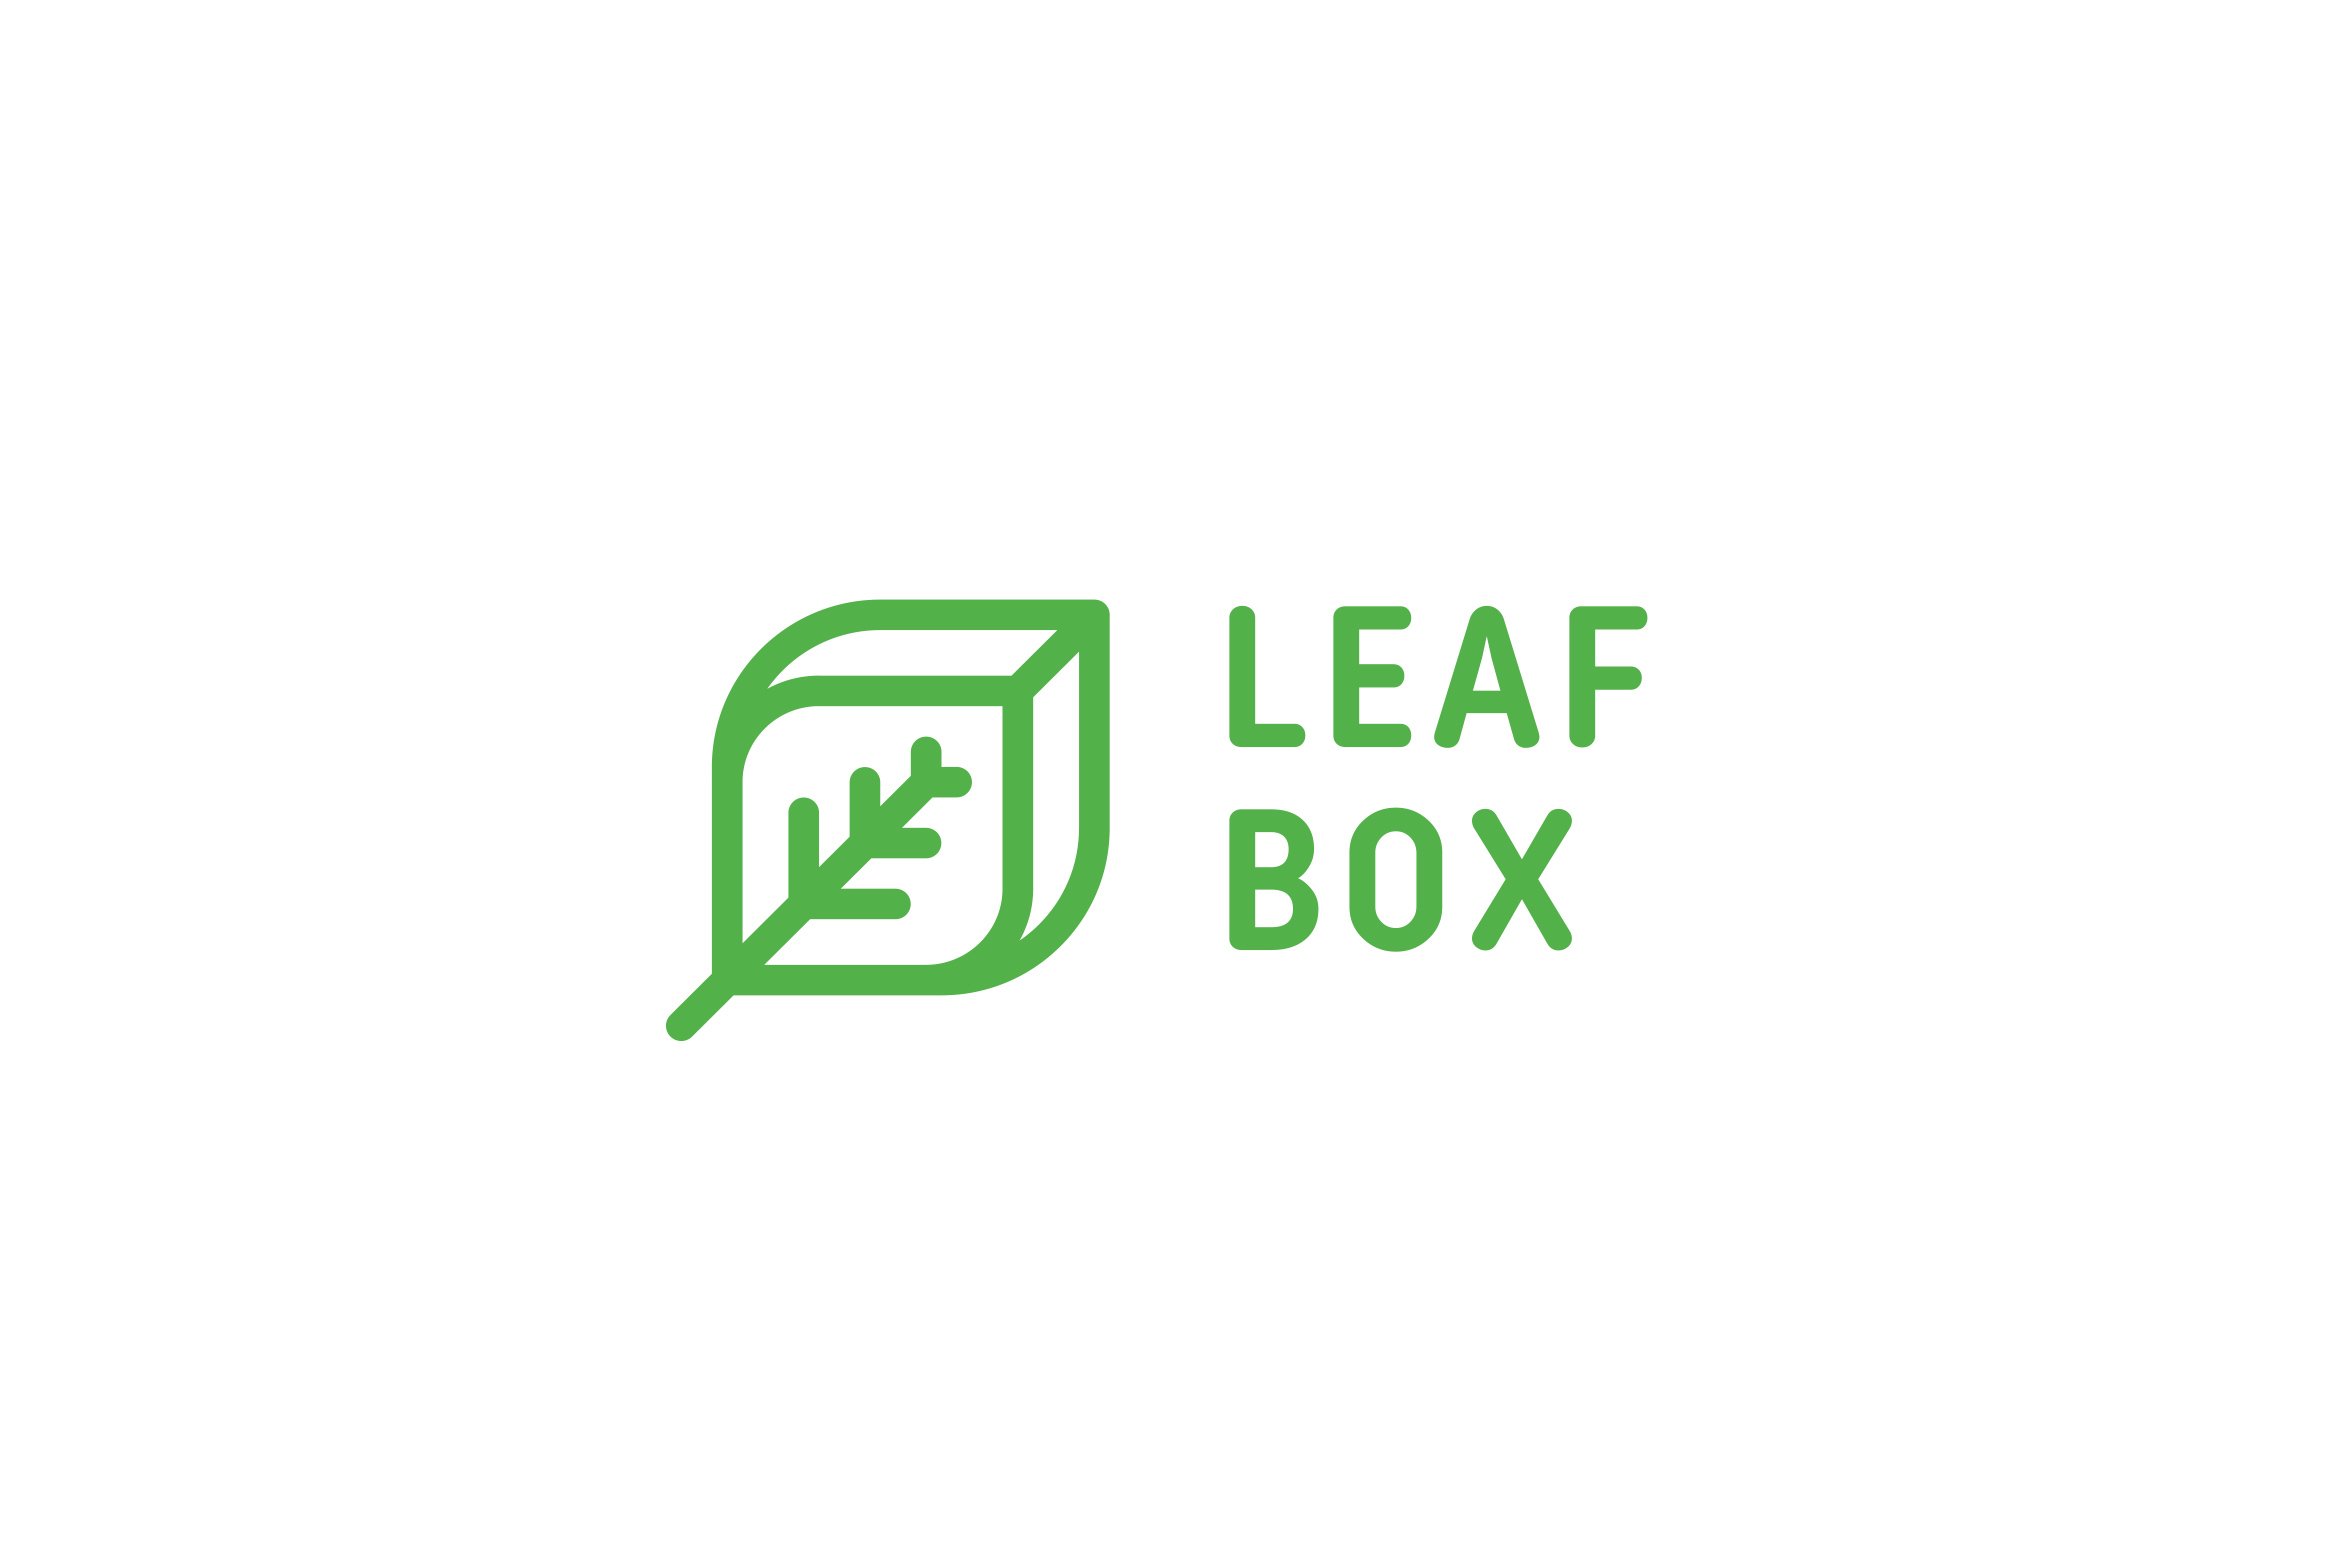 Leaf Box Logo cover image.